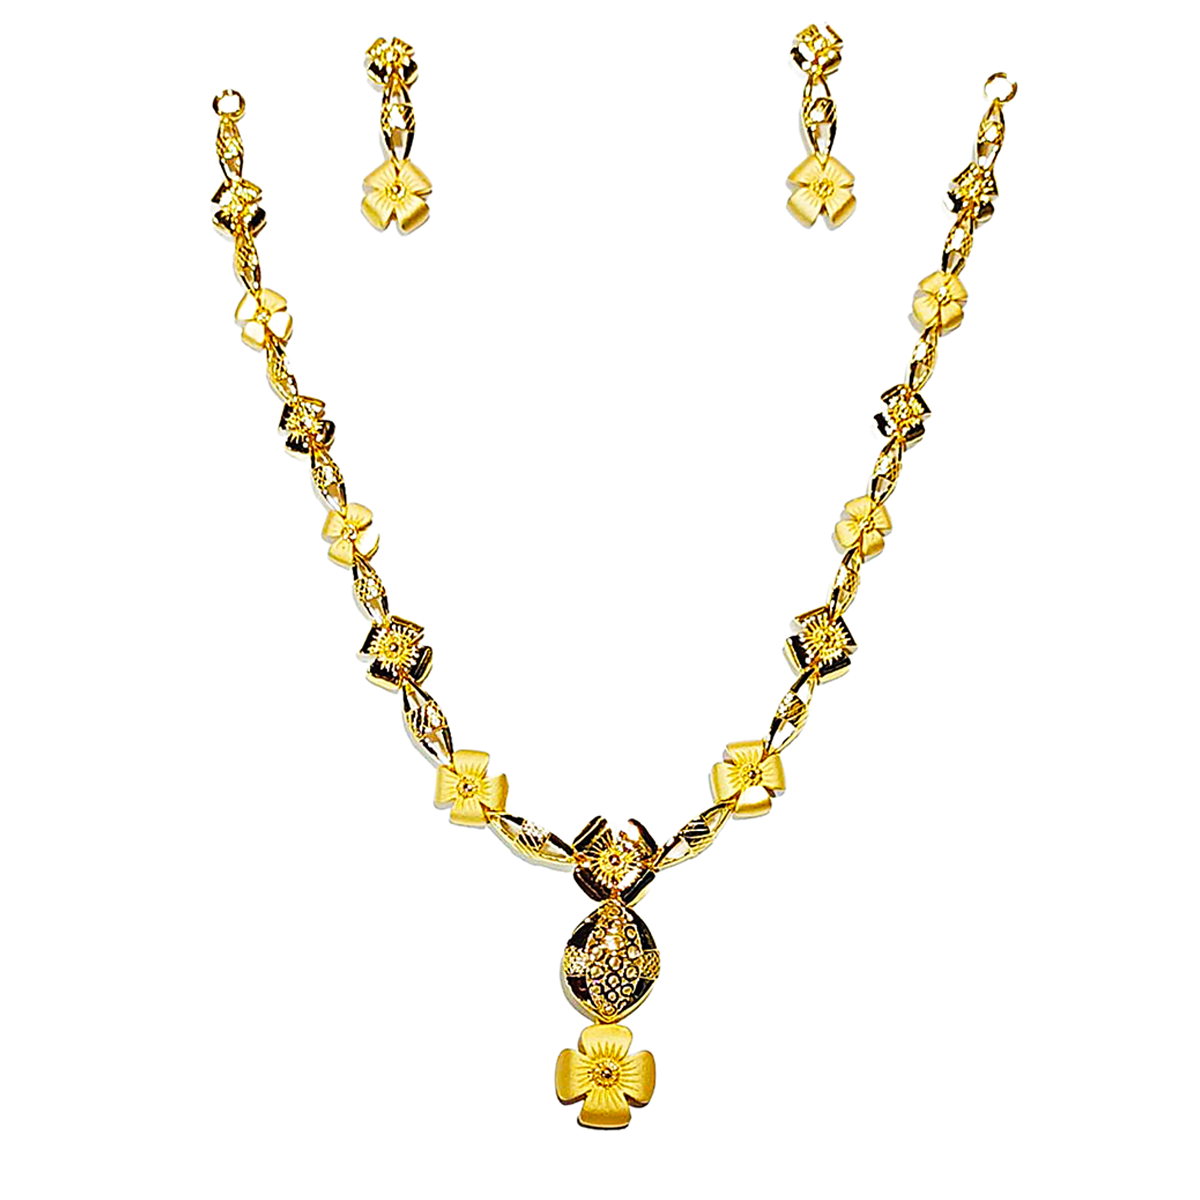 Darshana gold necklace set